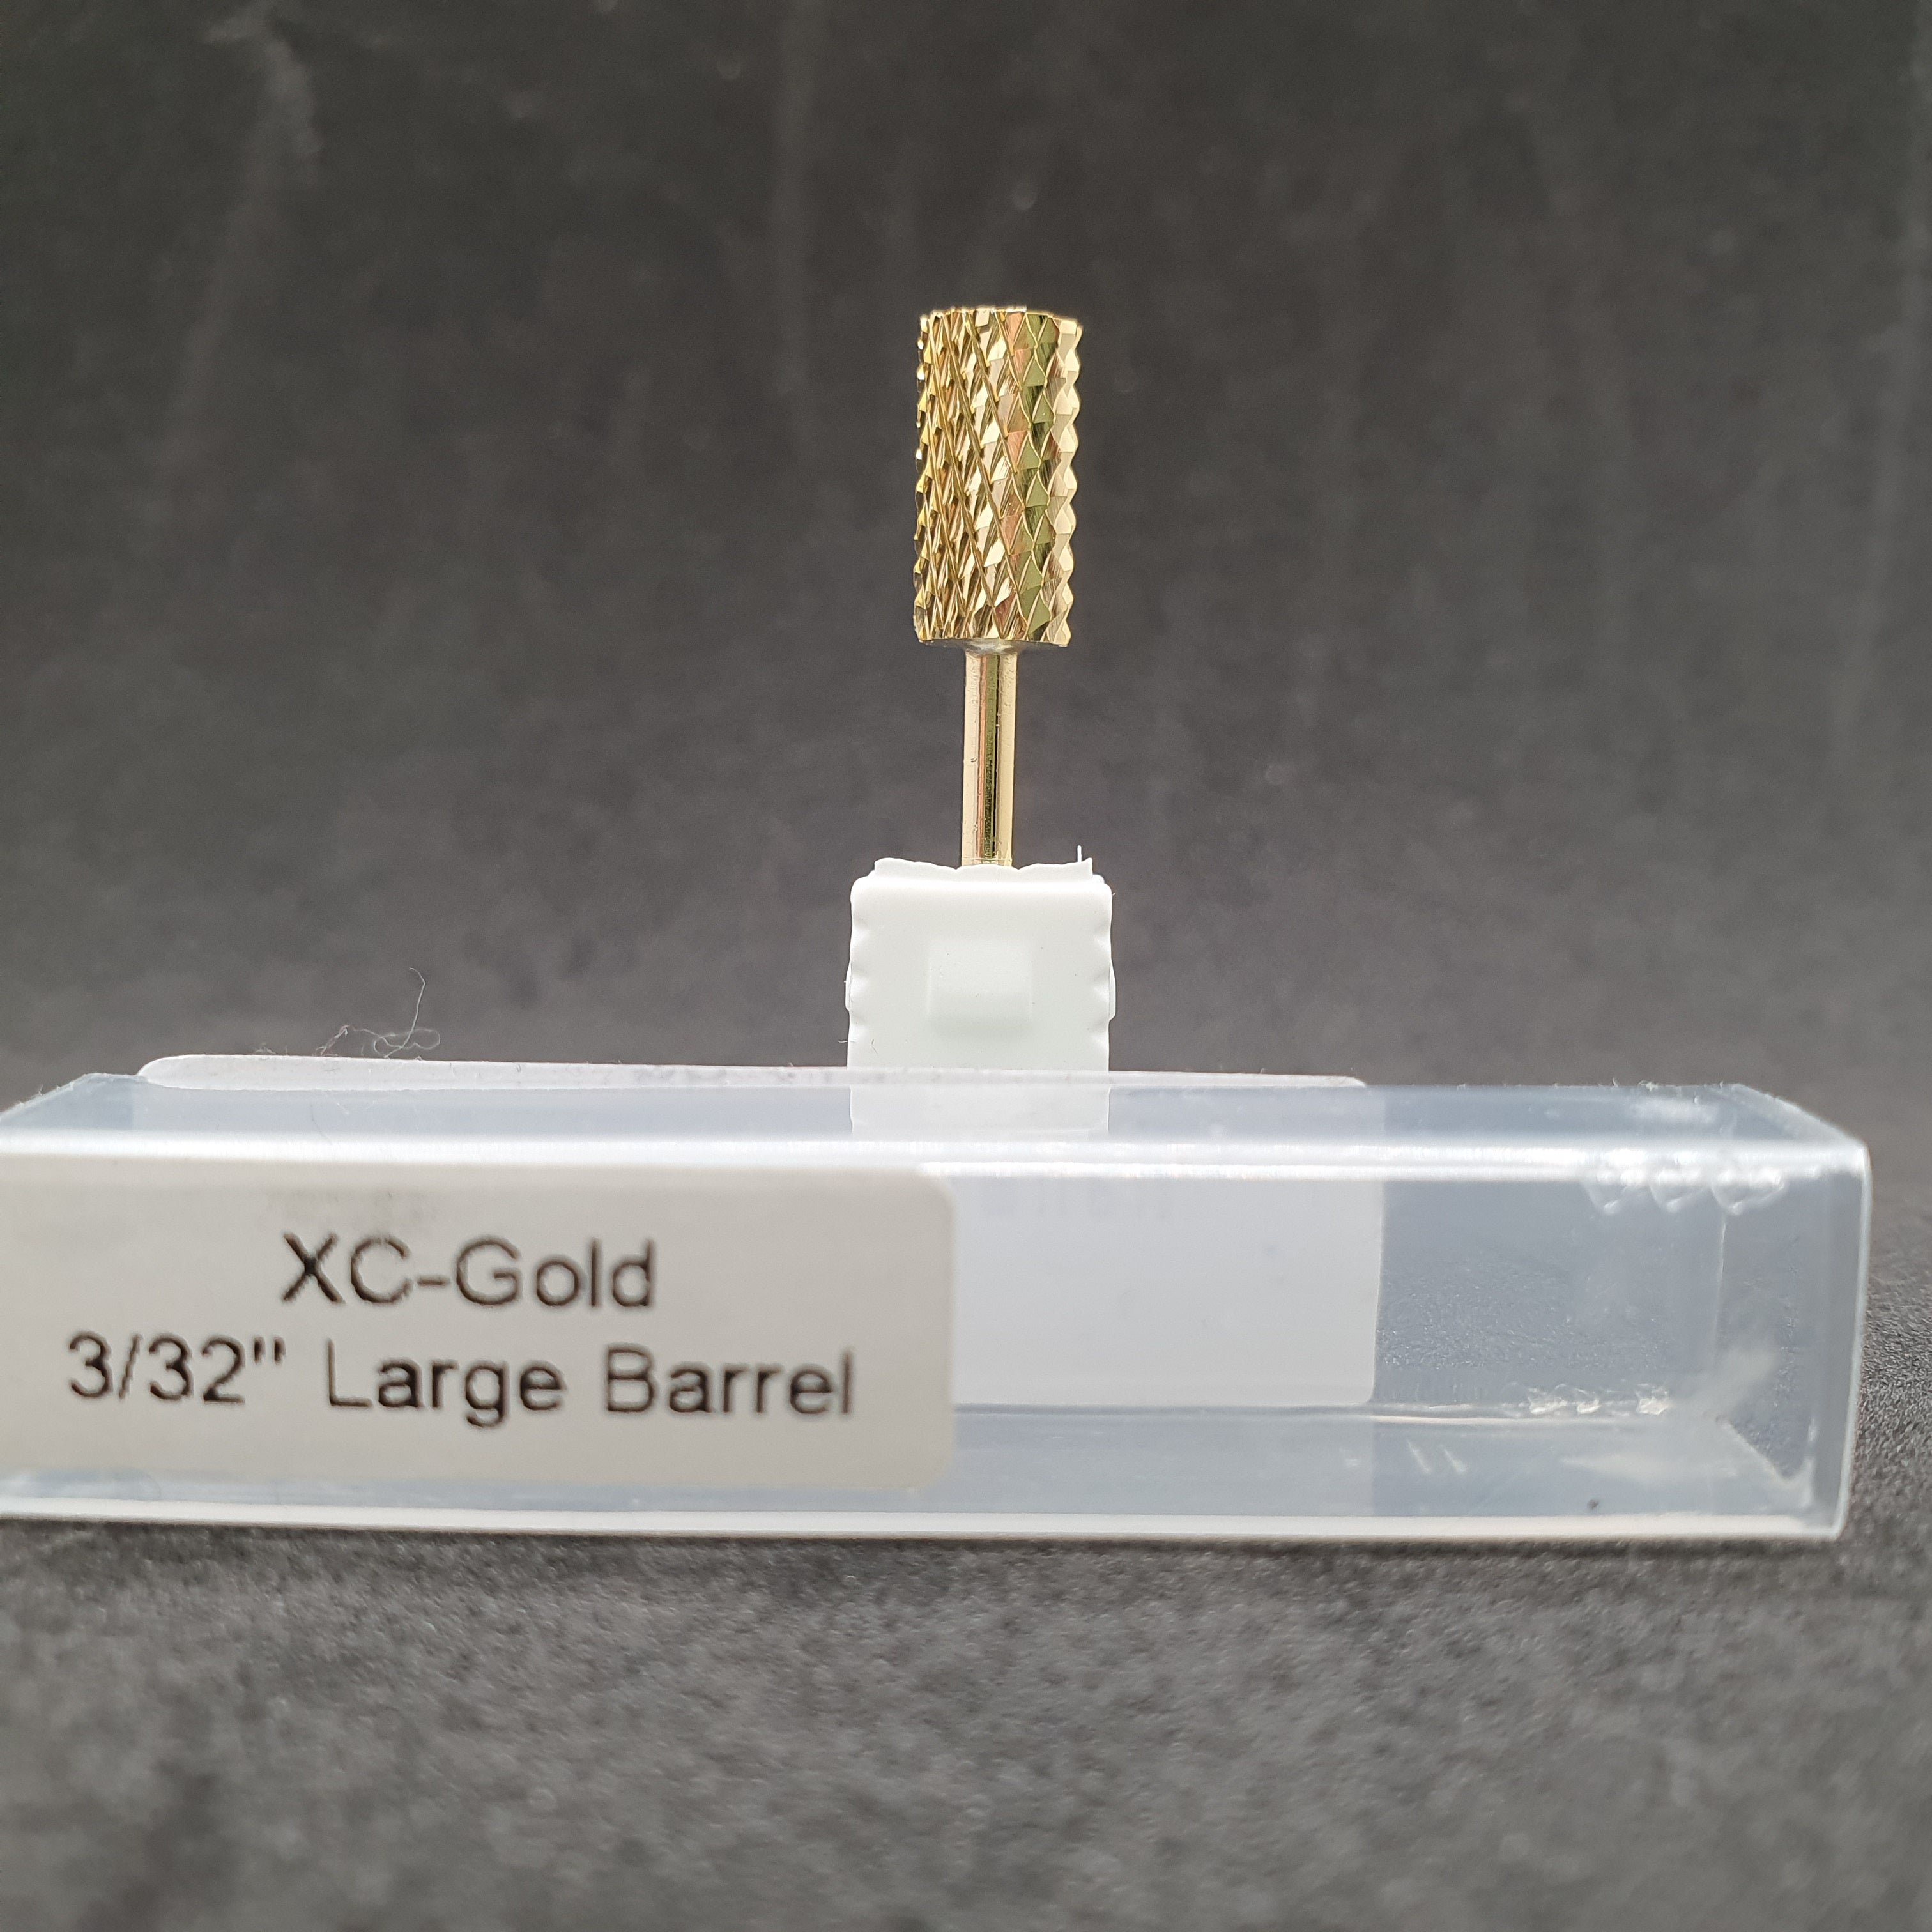 XC-Gold 3/32" Large Barrel- Nail Bit